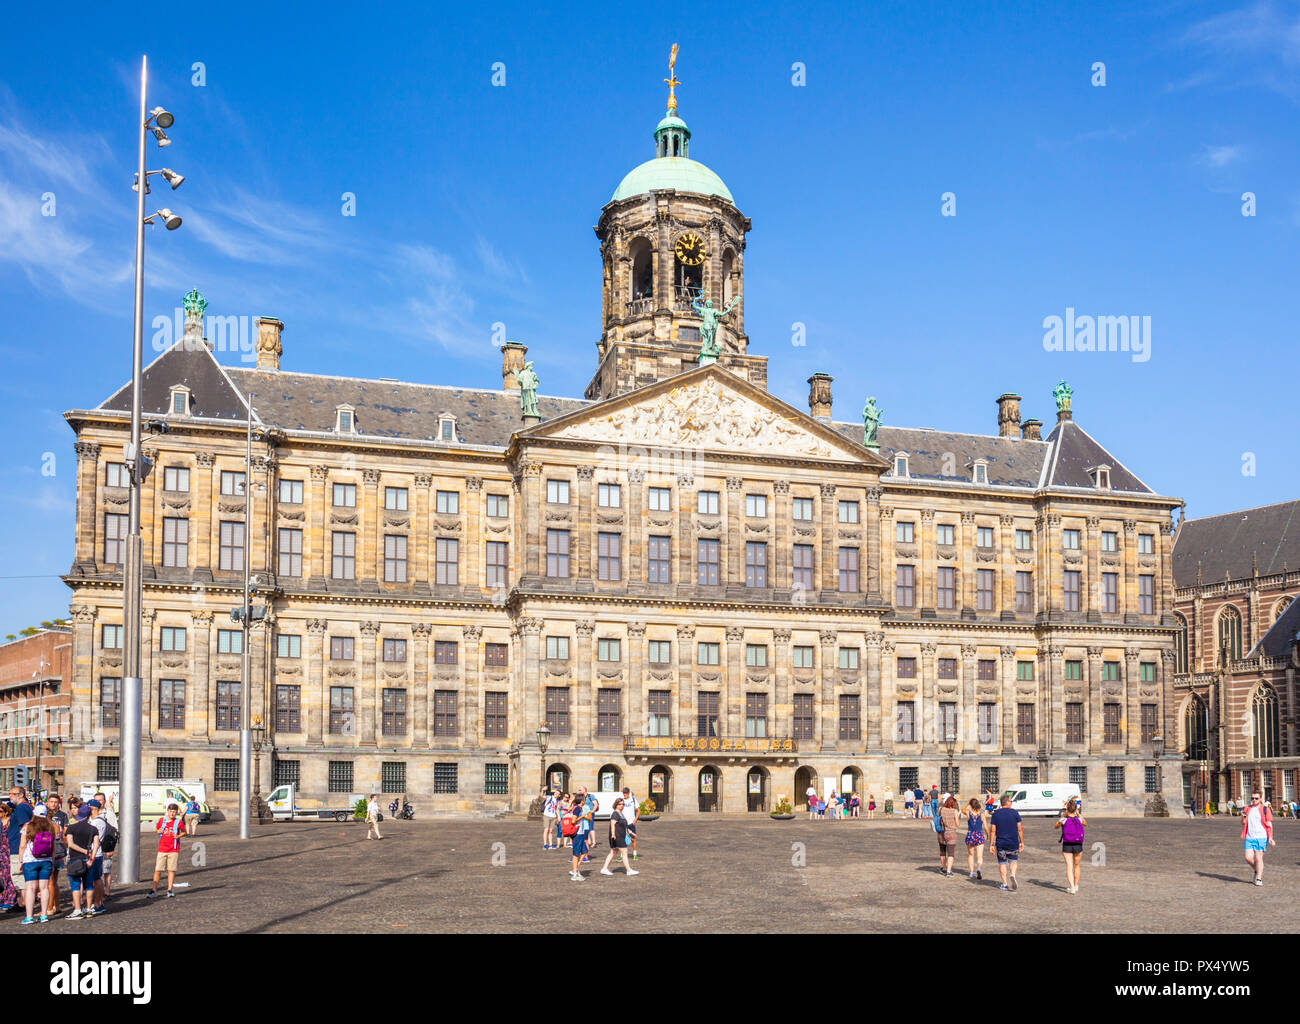 Der Königliche Palast in Amsterdam Koninklijk Paleis in Dam Square Amsterdam Amsterdam, Niederlande Holland EU Europa Stockfoto